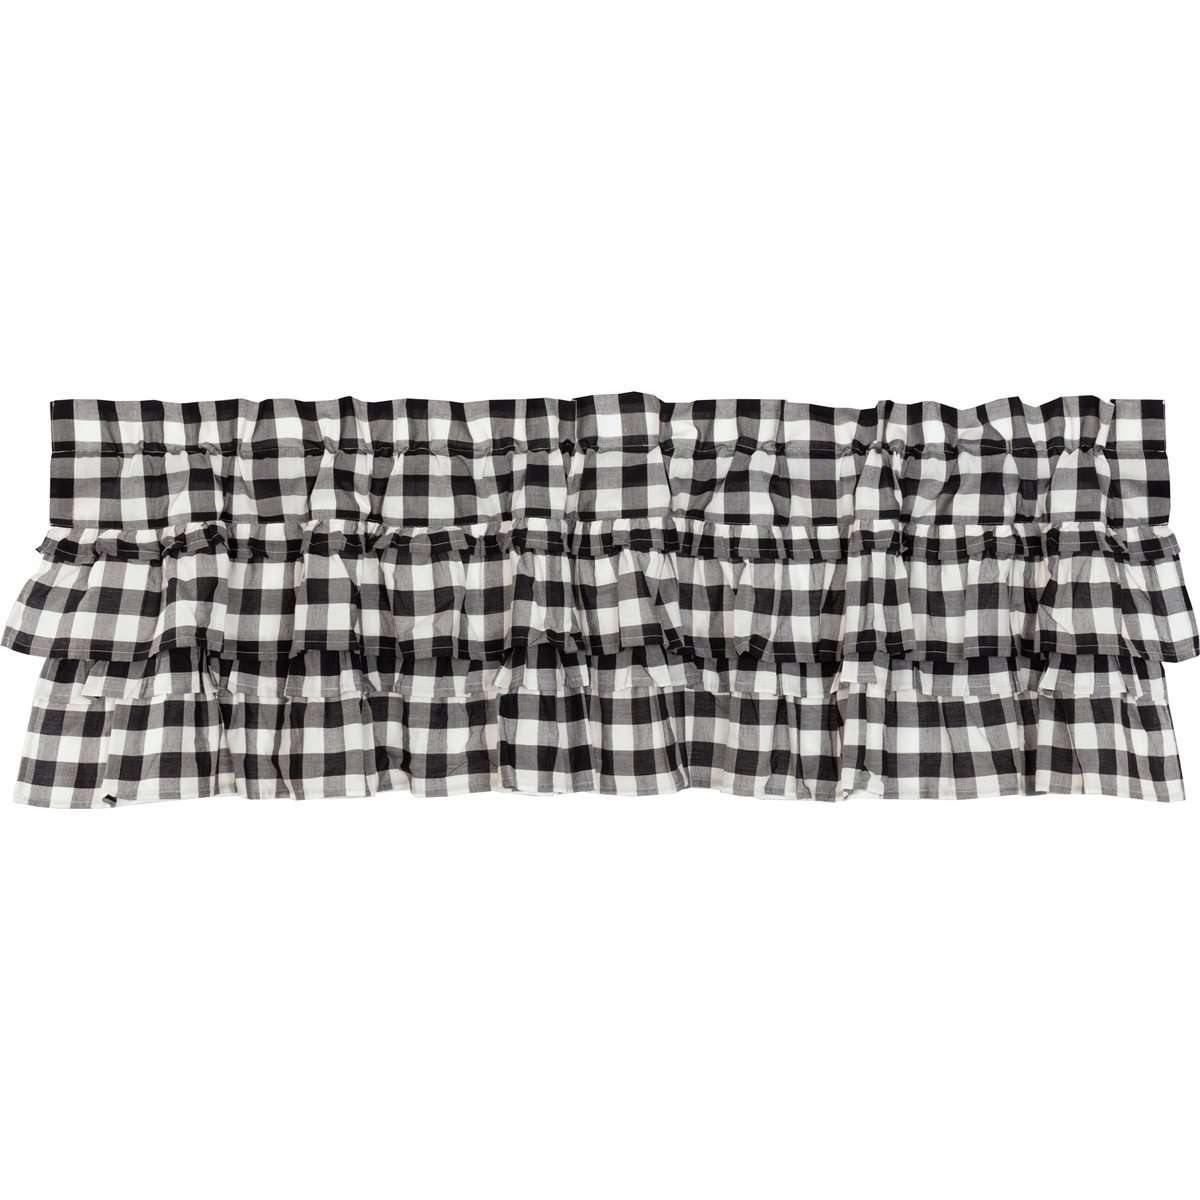 Annie Buffalo Black Check Ruffled Valance Curtain 16x60 VHC Brands - The Fox Decor